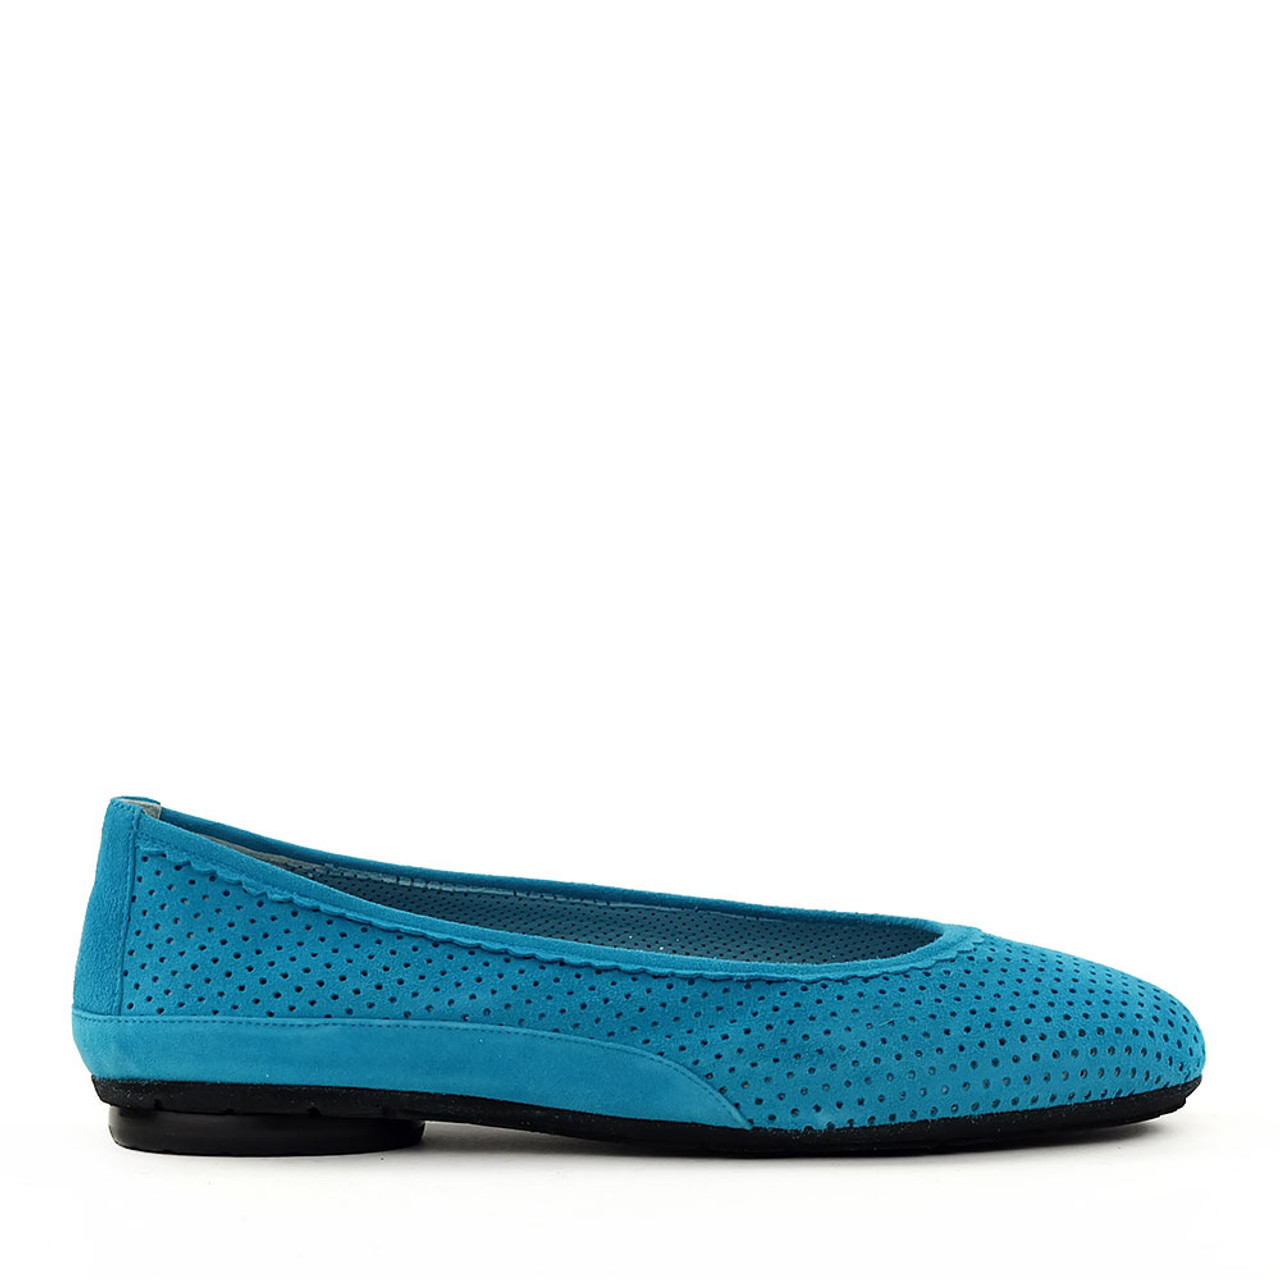 Thierry Rabotin Genie 7445 Flat in light blue | Hanig's Footwear